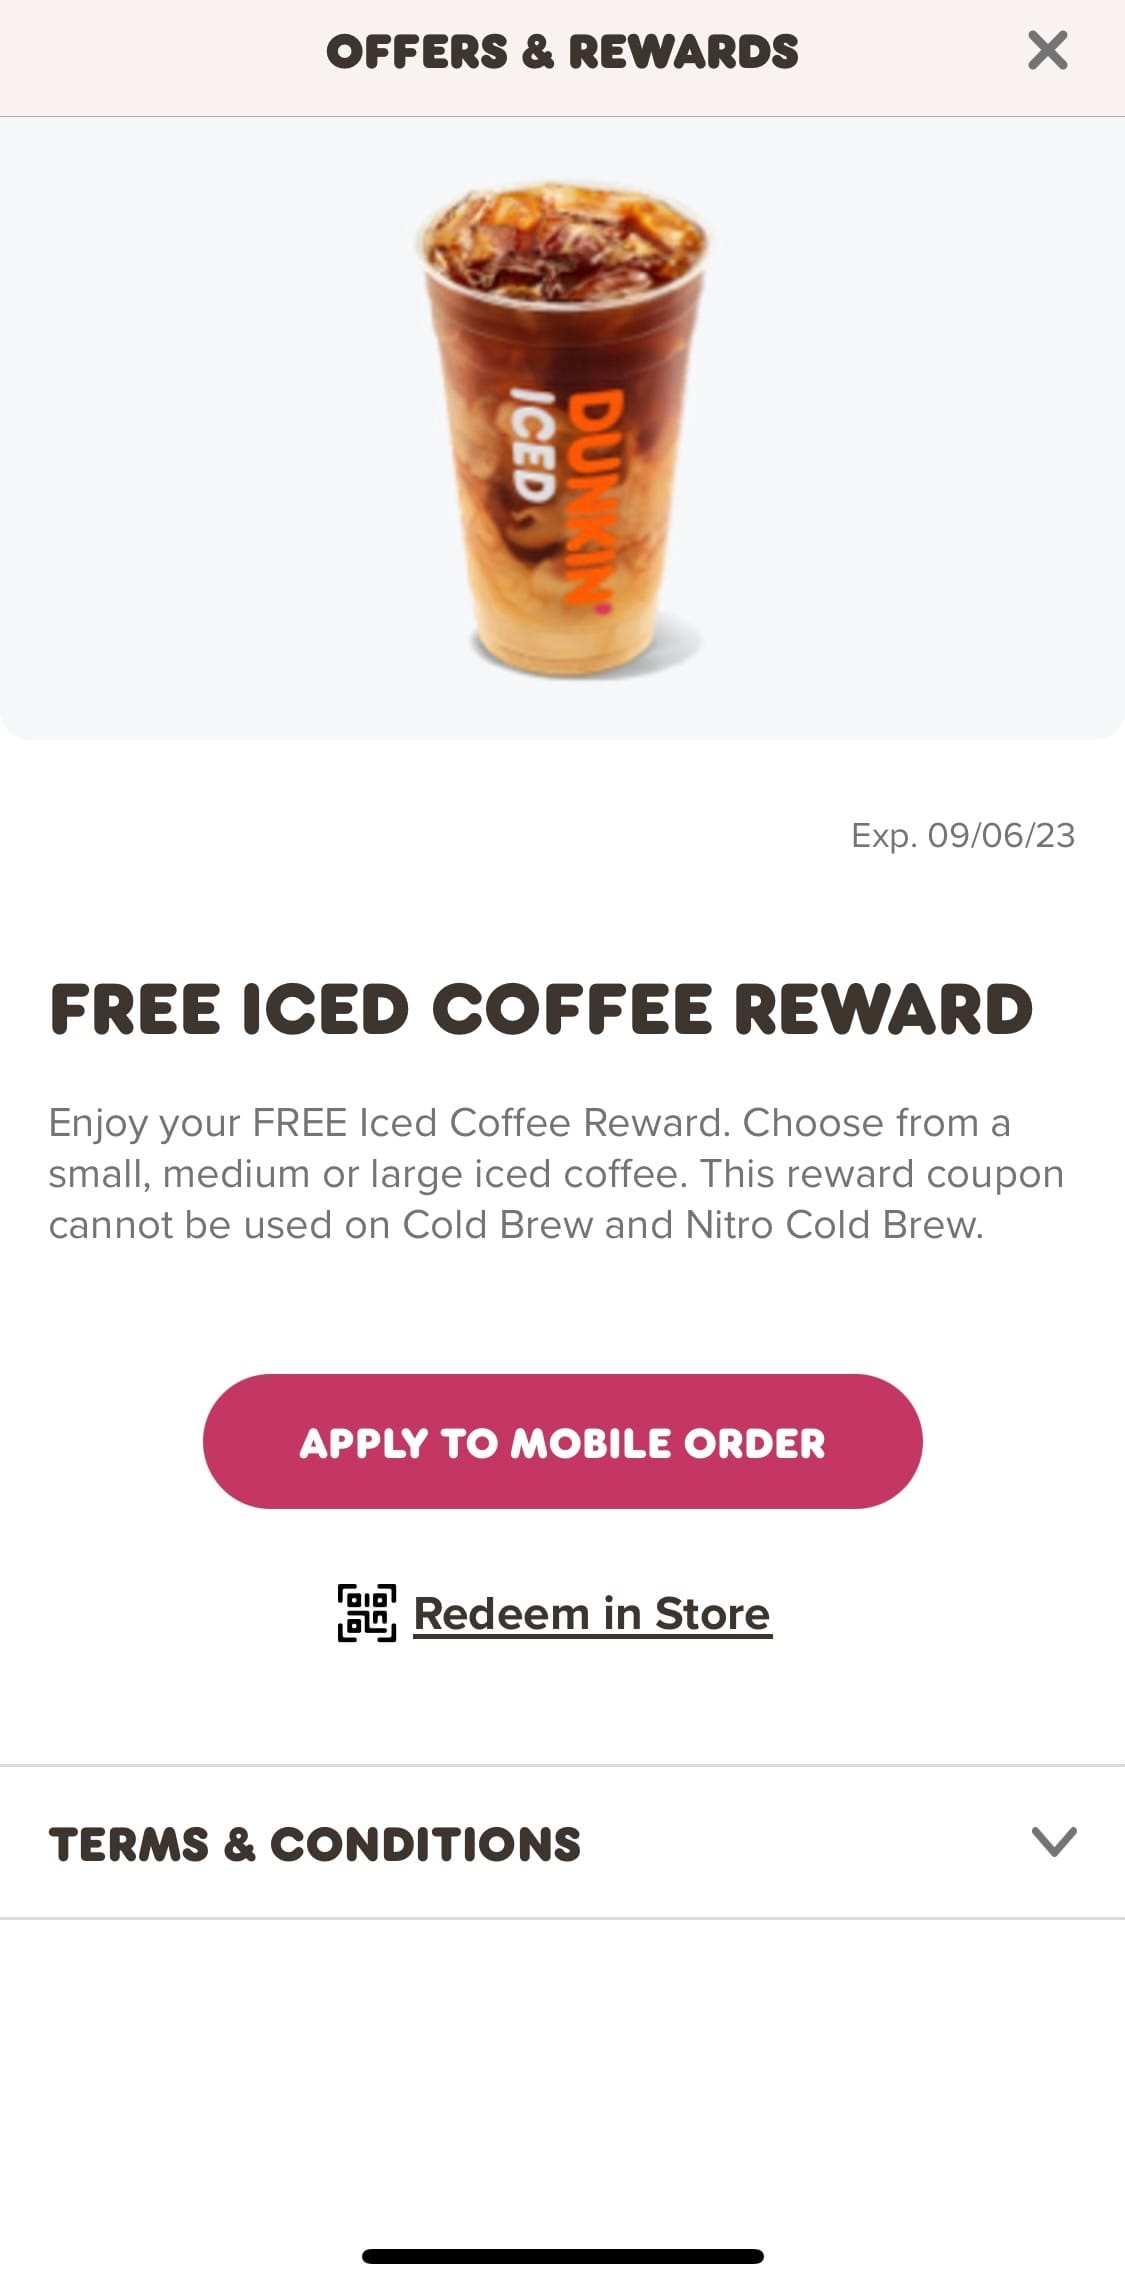 Free iced coffee reward in Dunkin' Rewards app following input of "JESS" promo code.